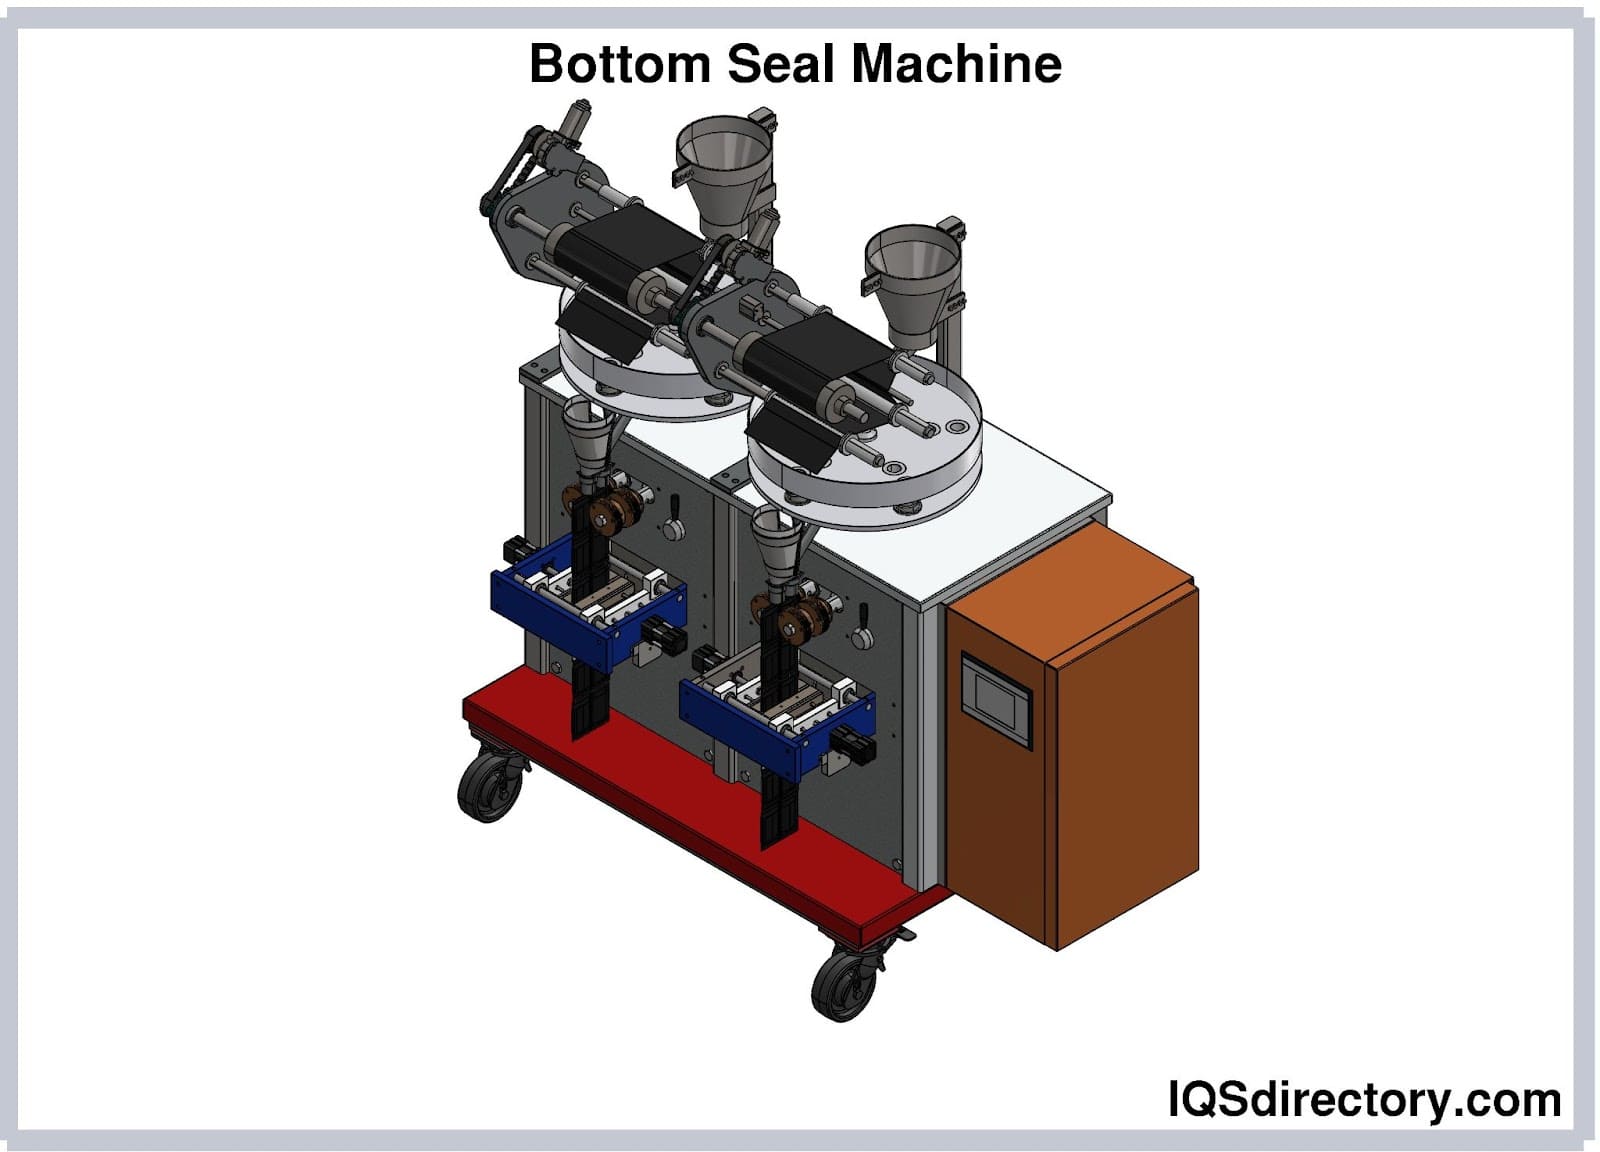 Bottom Seal Machine